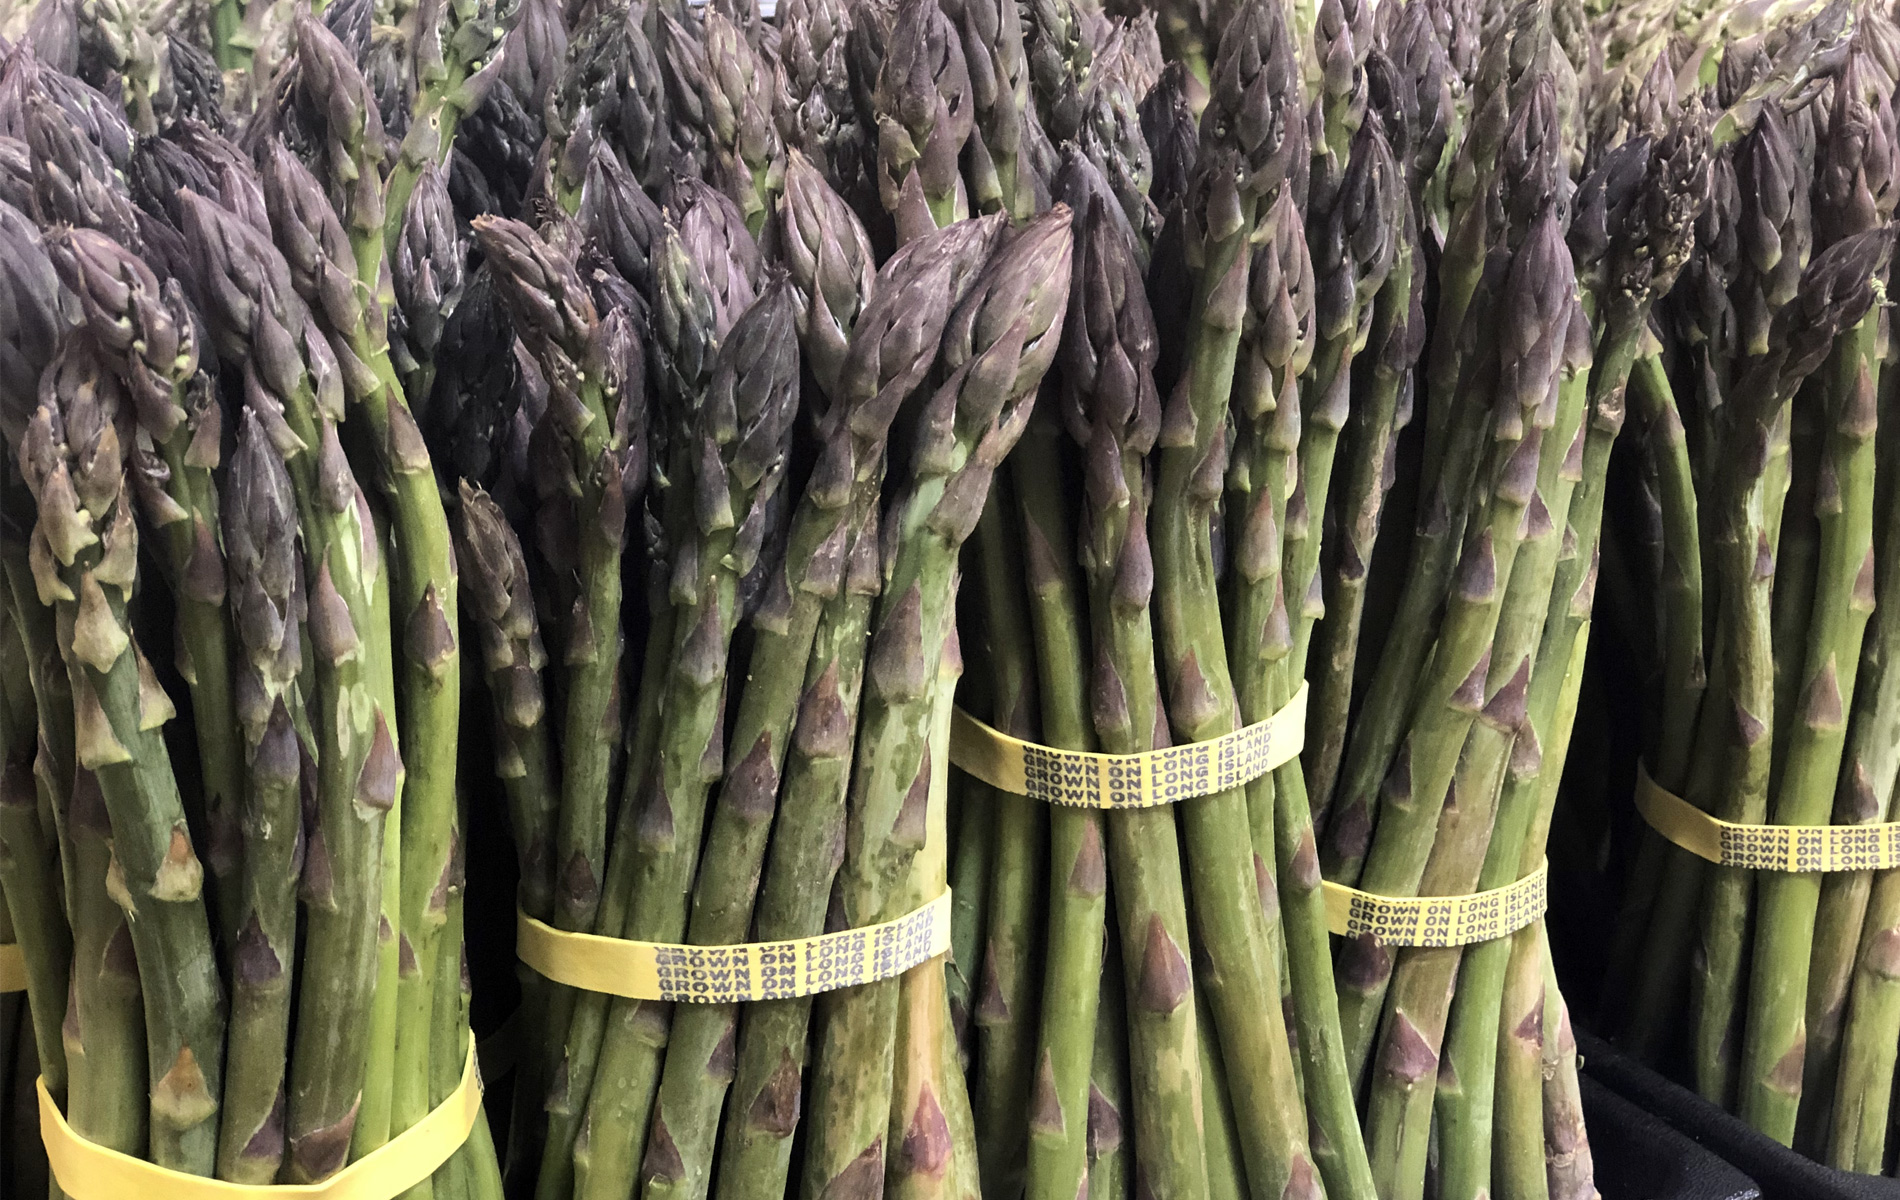 Local Asparagus Hits the East End - Hapco Farms